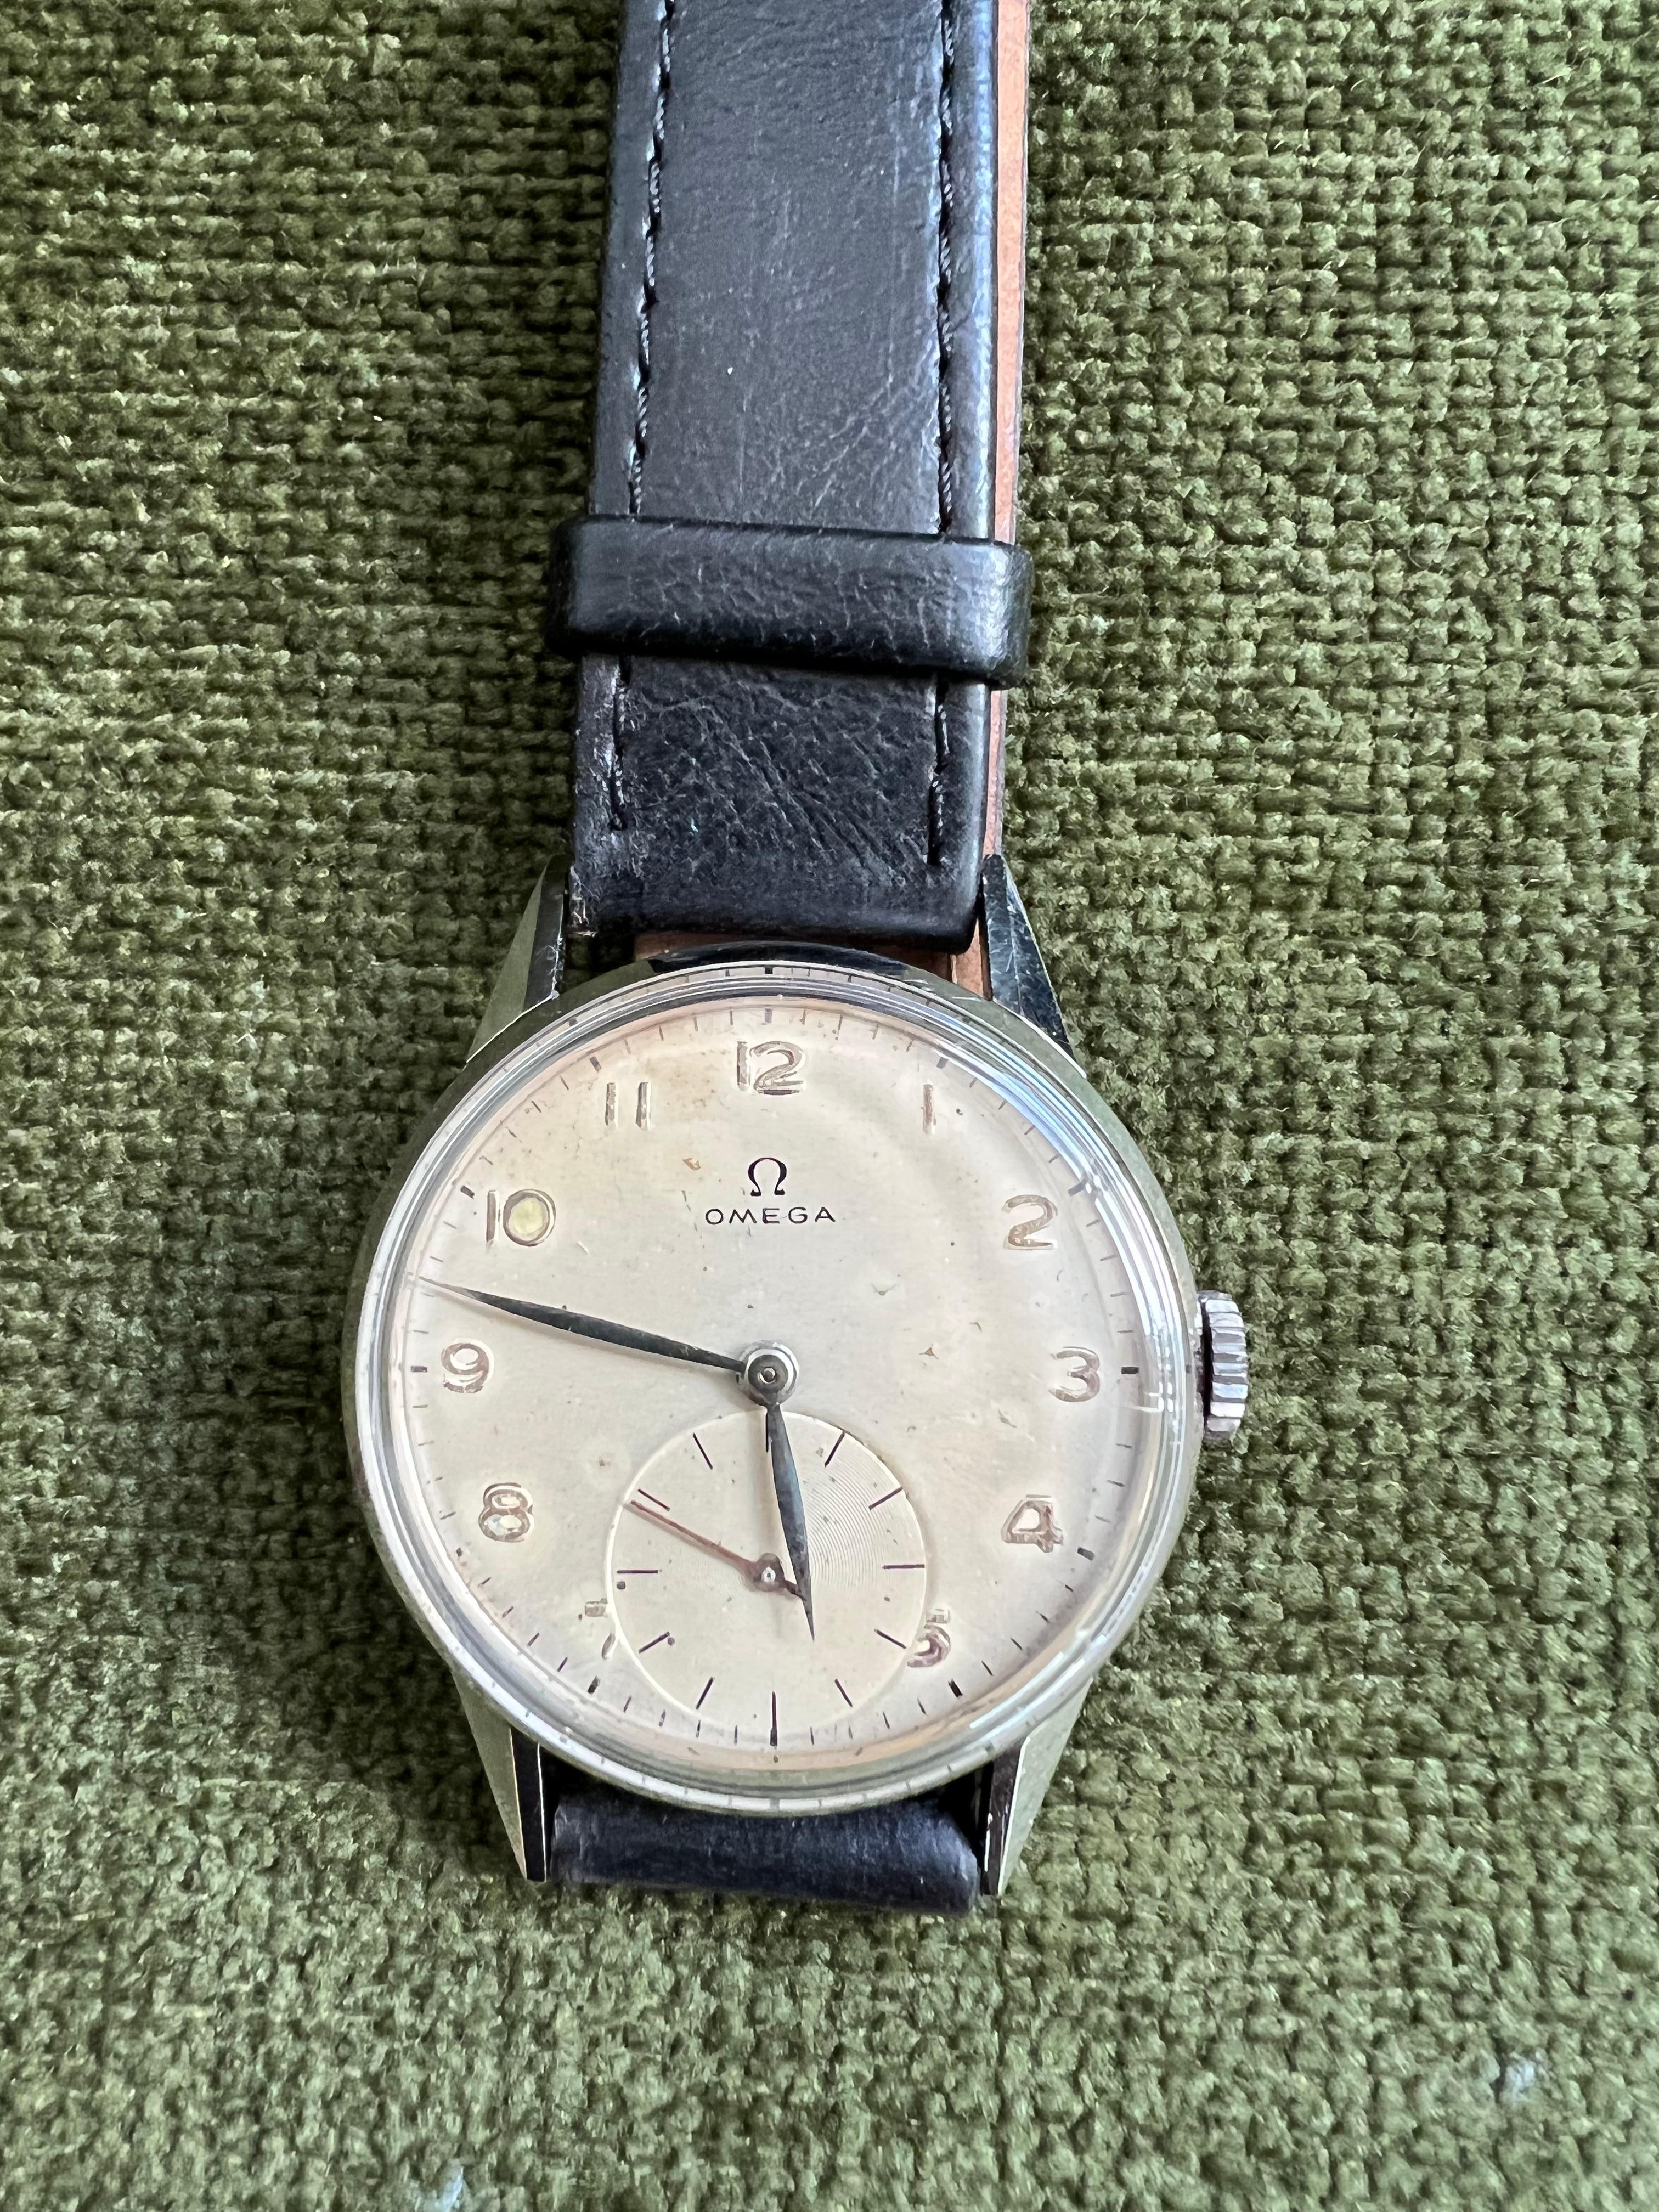 Seltene Vintage 1944 Omega Chronometer-Uhr, US Navy, ausgestellt im Angebot 3